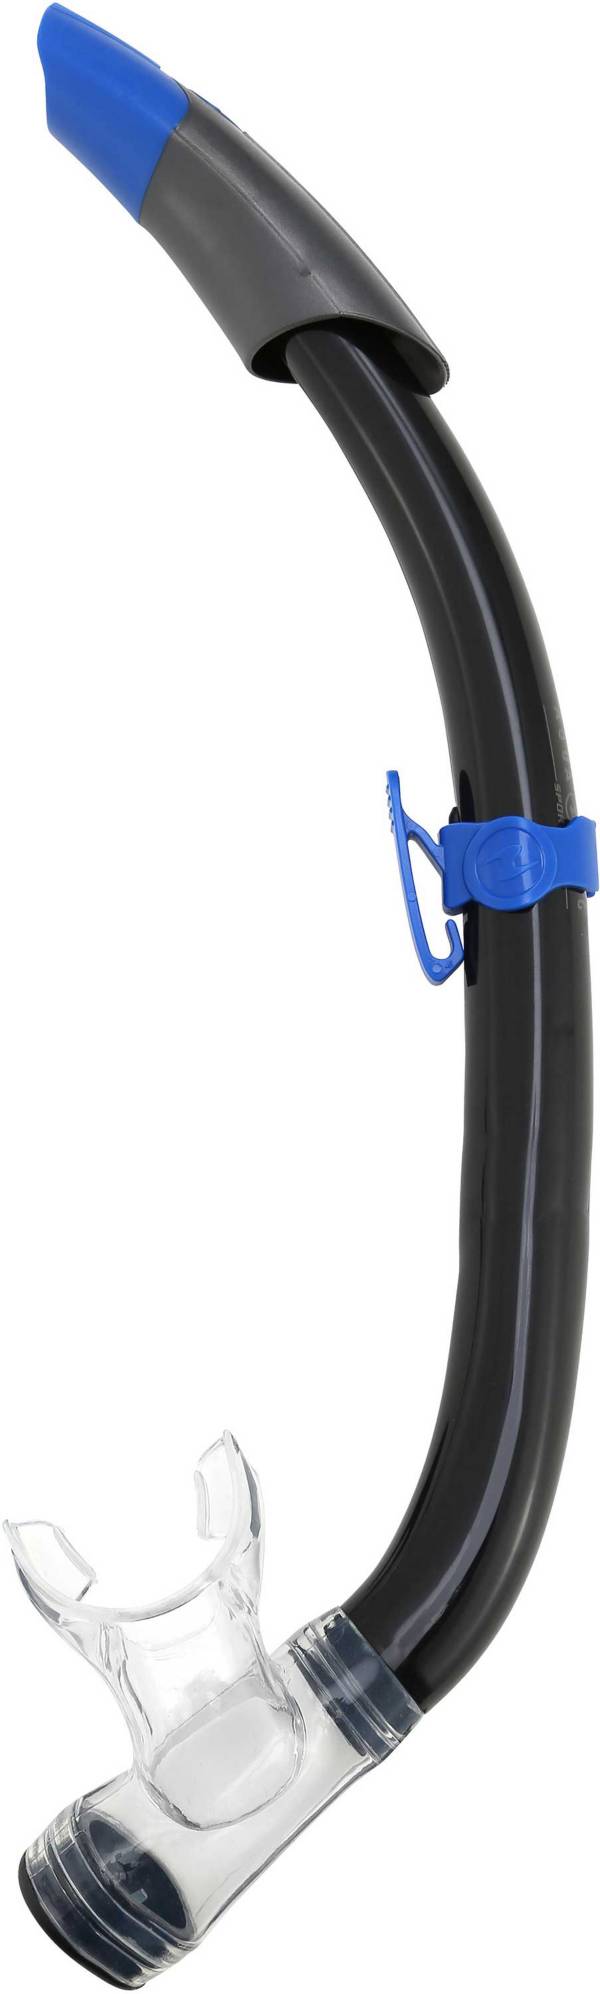 Aqua Lung Sport Adult Pike Snorkel product image